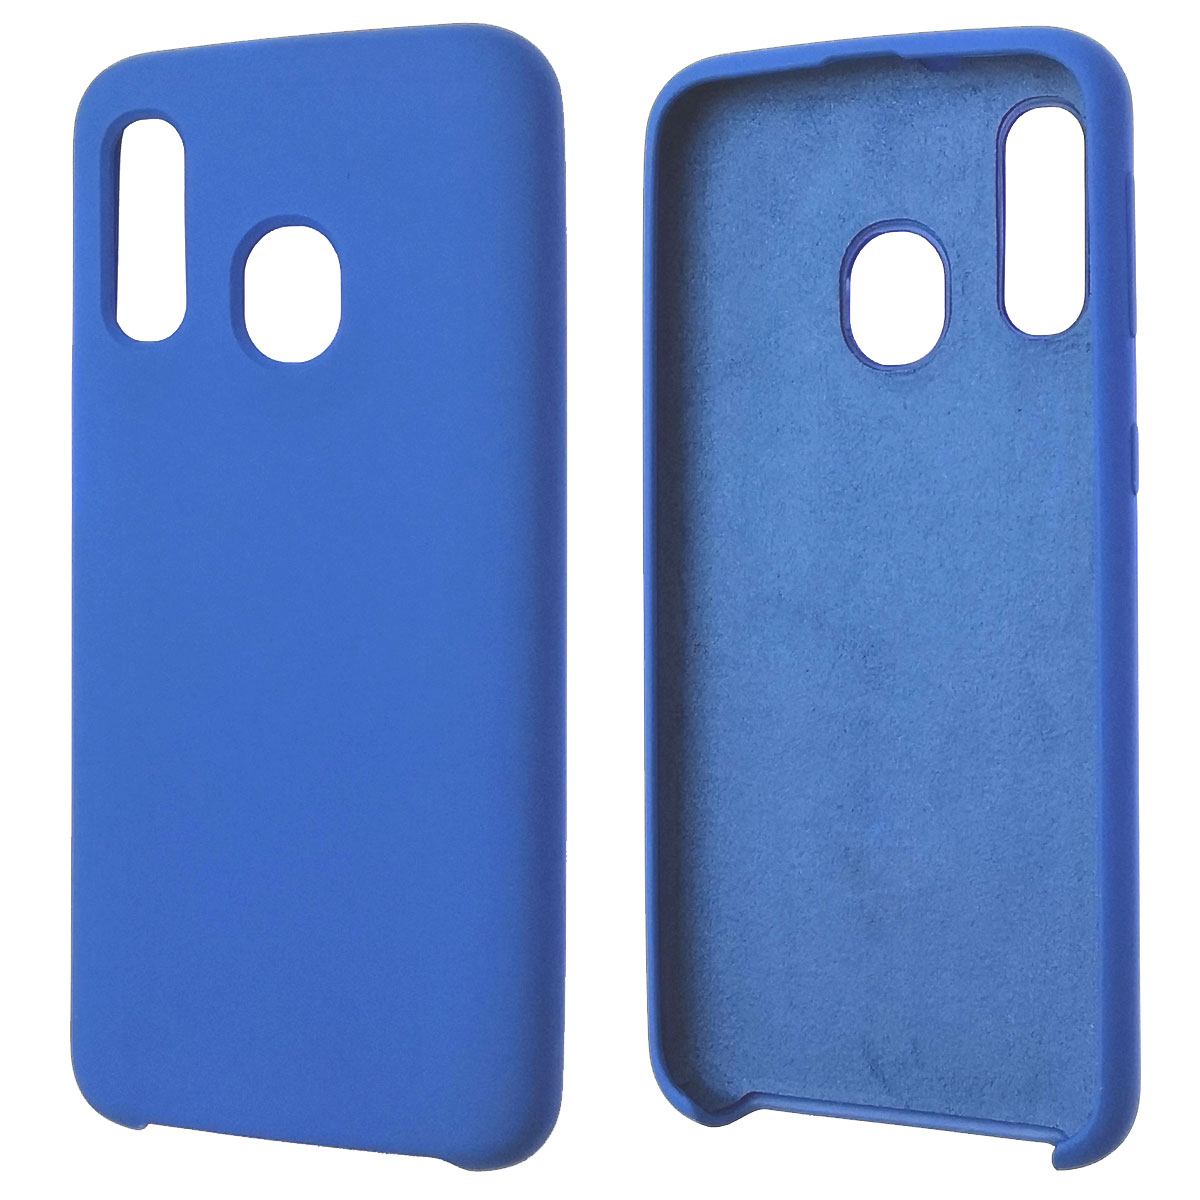 Чехол накладка Silicon Cover для SAMSUNG Galaxy A40 (SM-A405), силикон, бархат, цвет голубой.